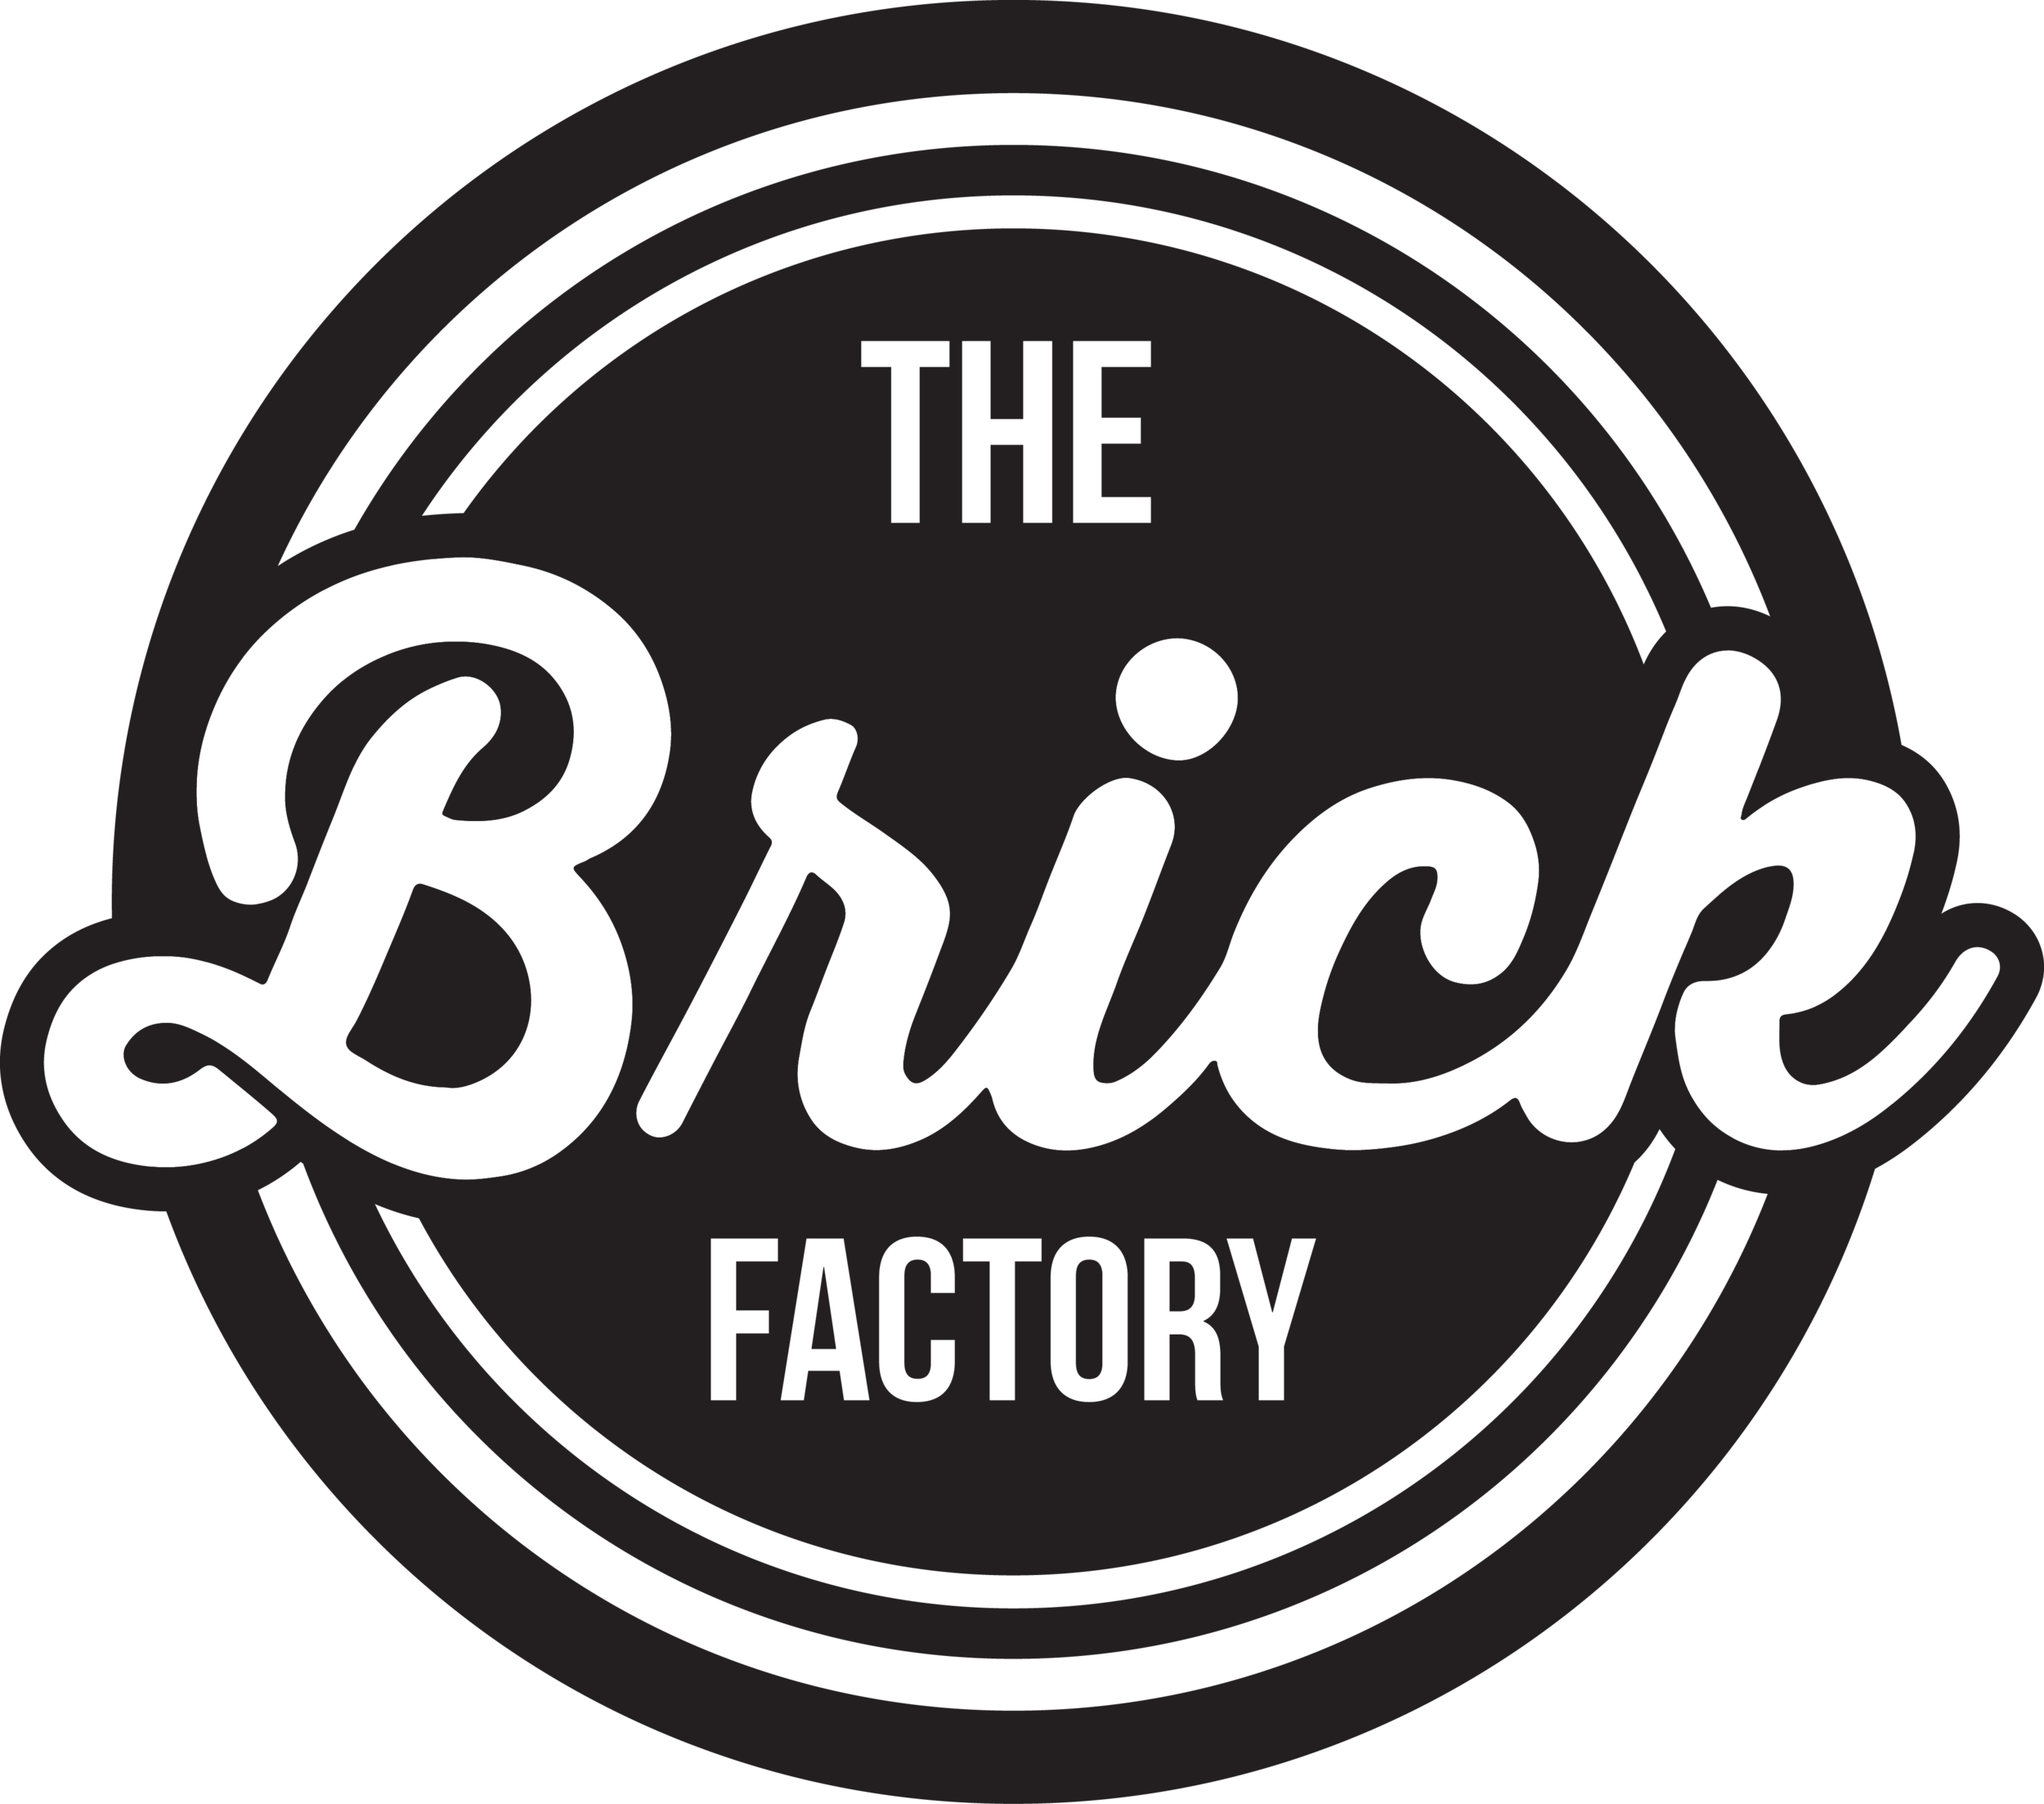 The Brick Factory